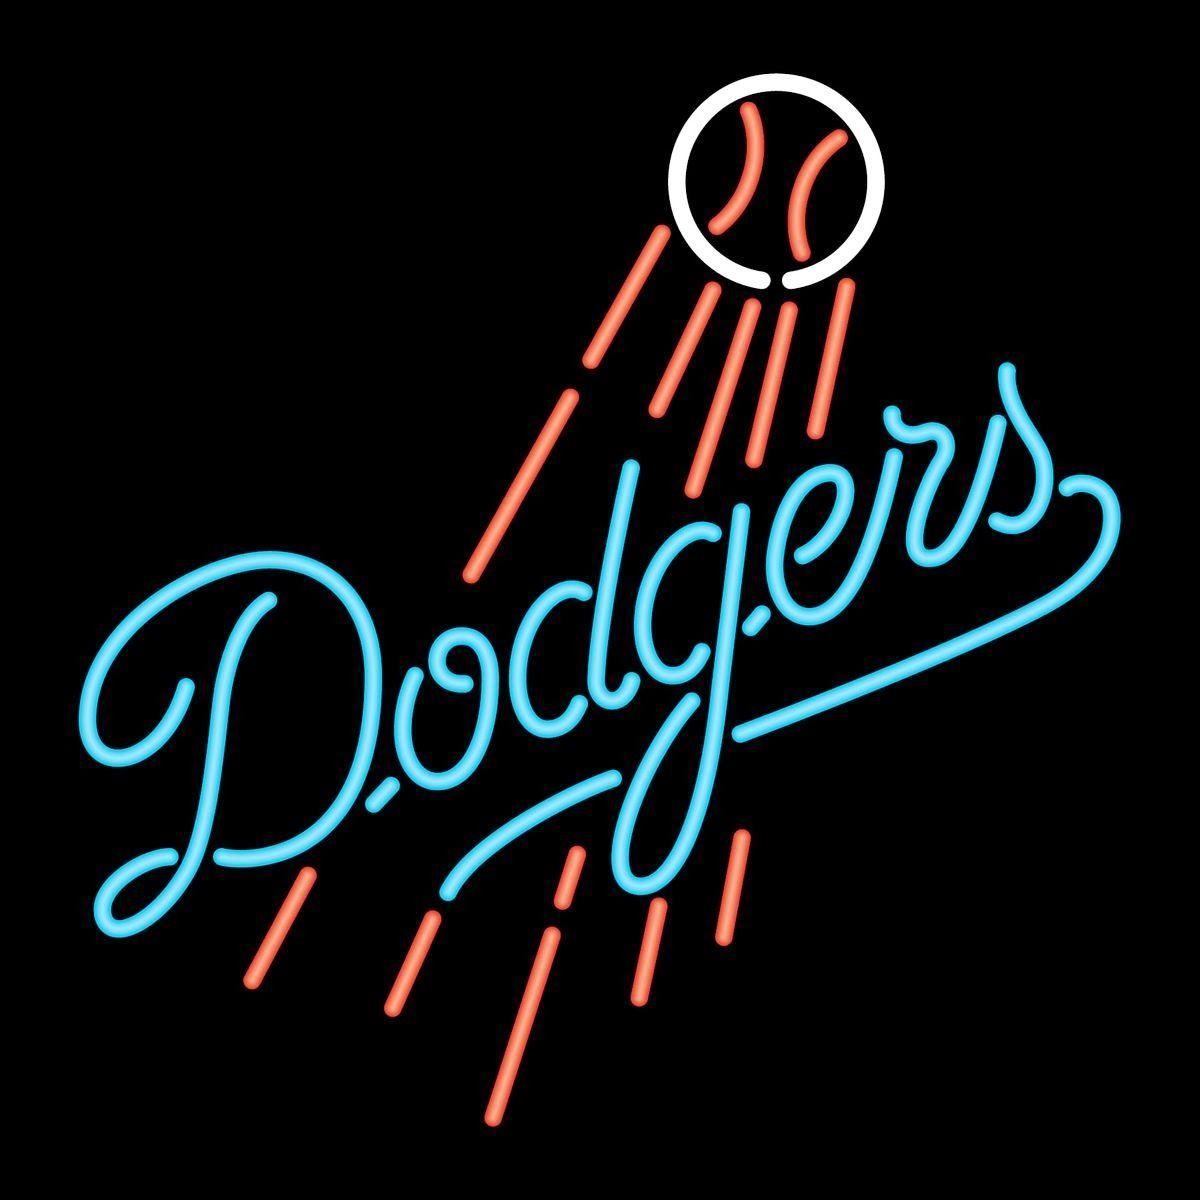 Los Dodgers Wallpaper. Los Angeles Dodgers